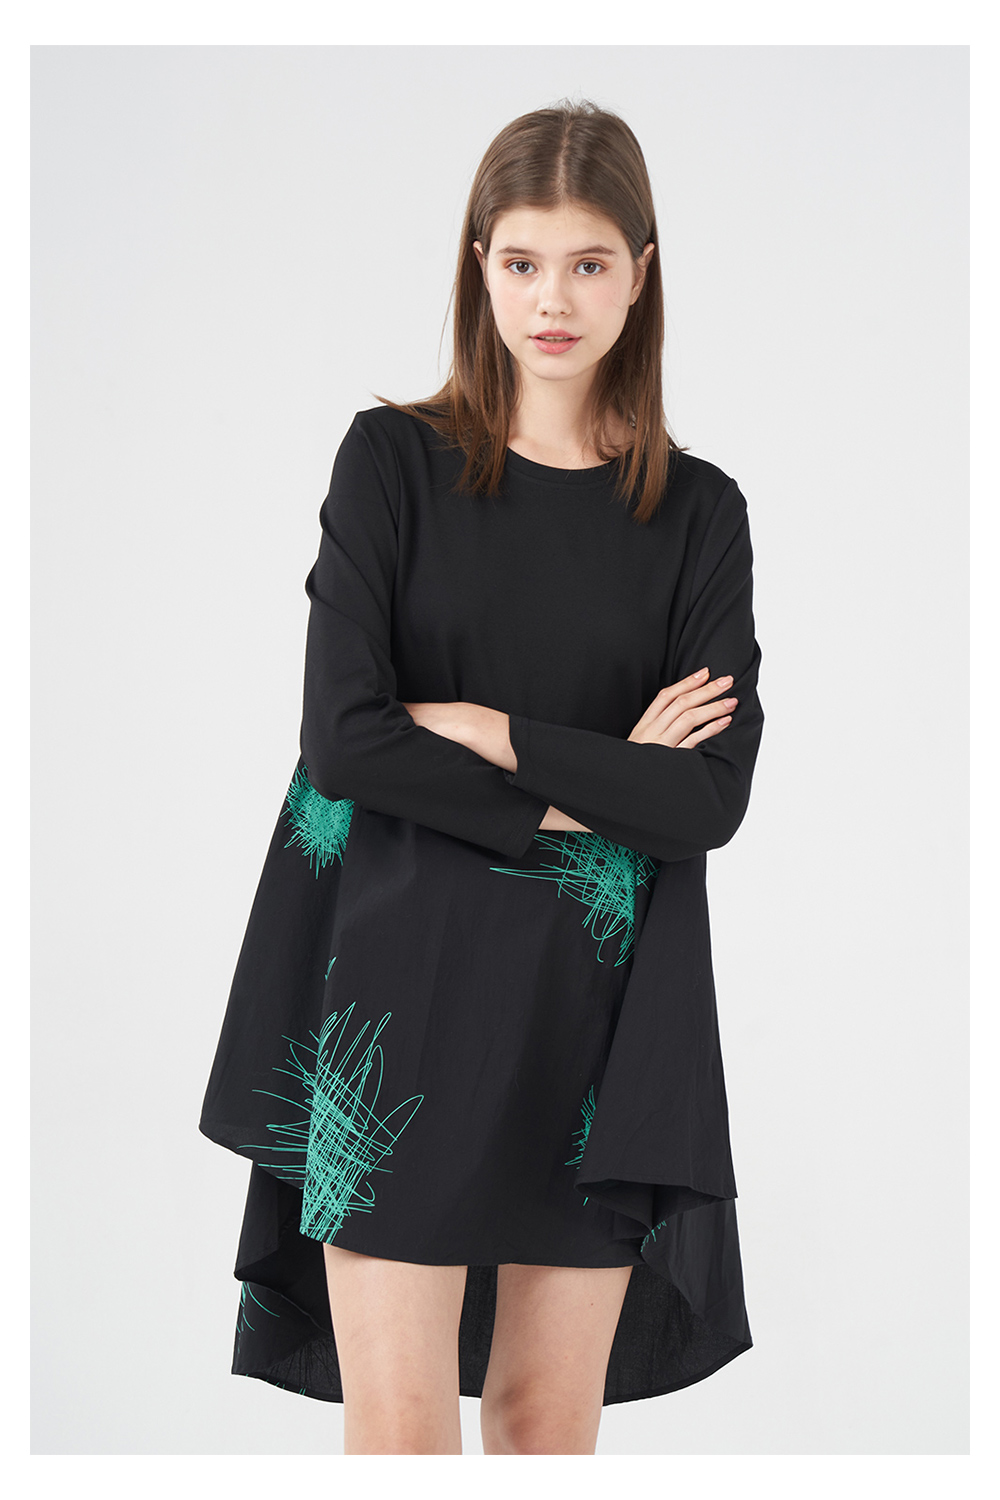 Qiruo 奇若名品 專櫃精品女裝黑色造型小傘狀短洋裝(黑底